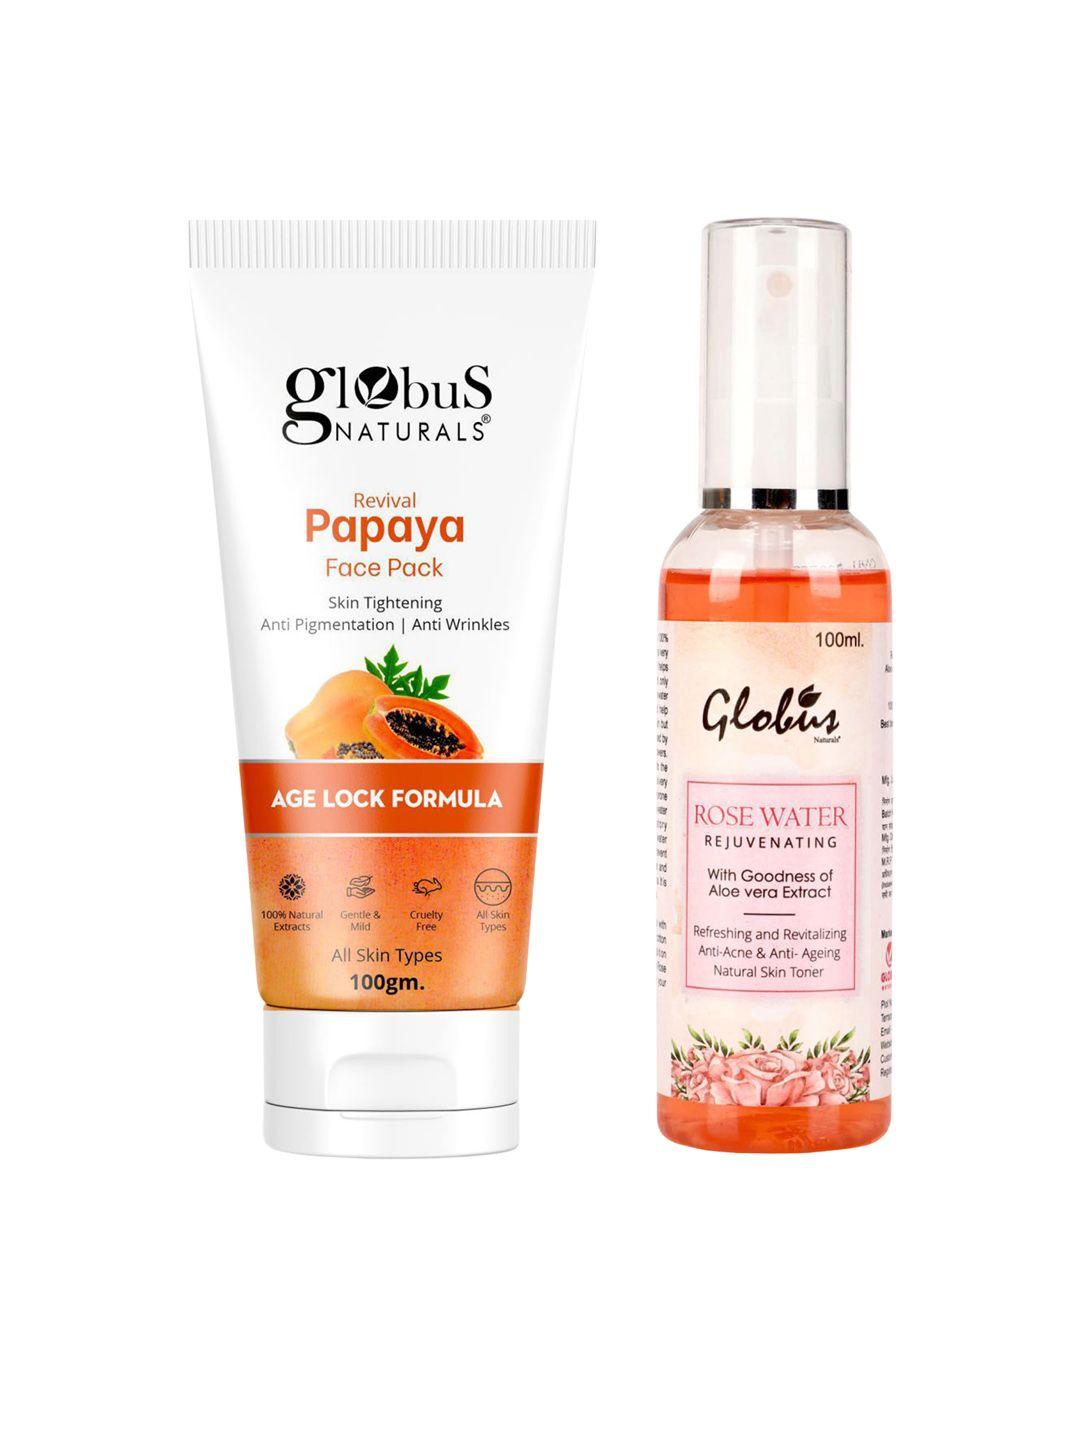 globus naturals set of 2 papaya face pack (100gm) & rose water toner (100ml)